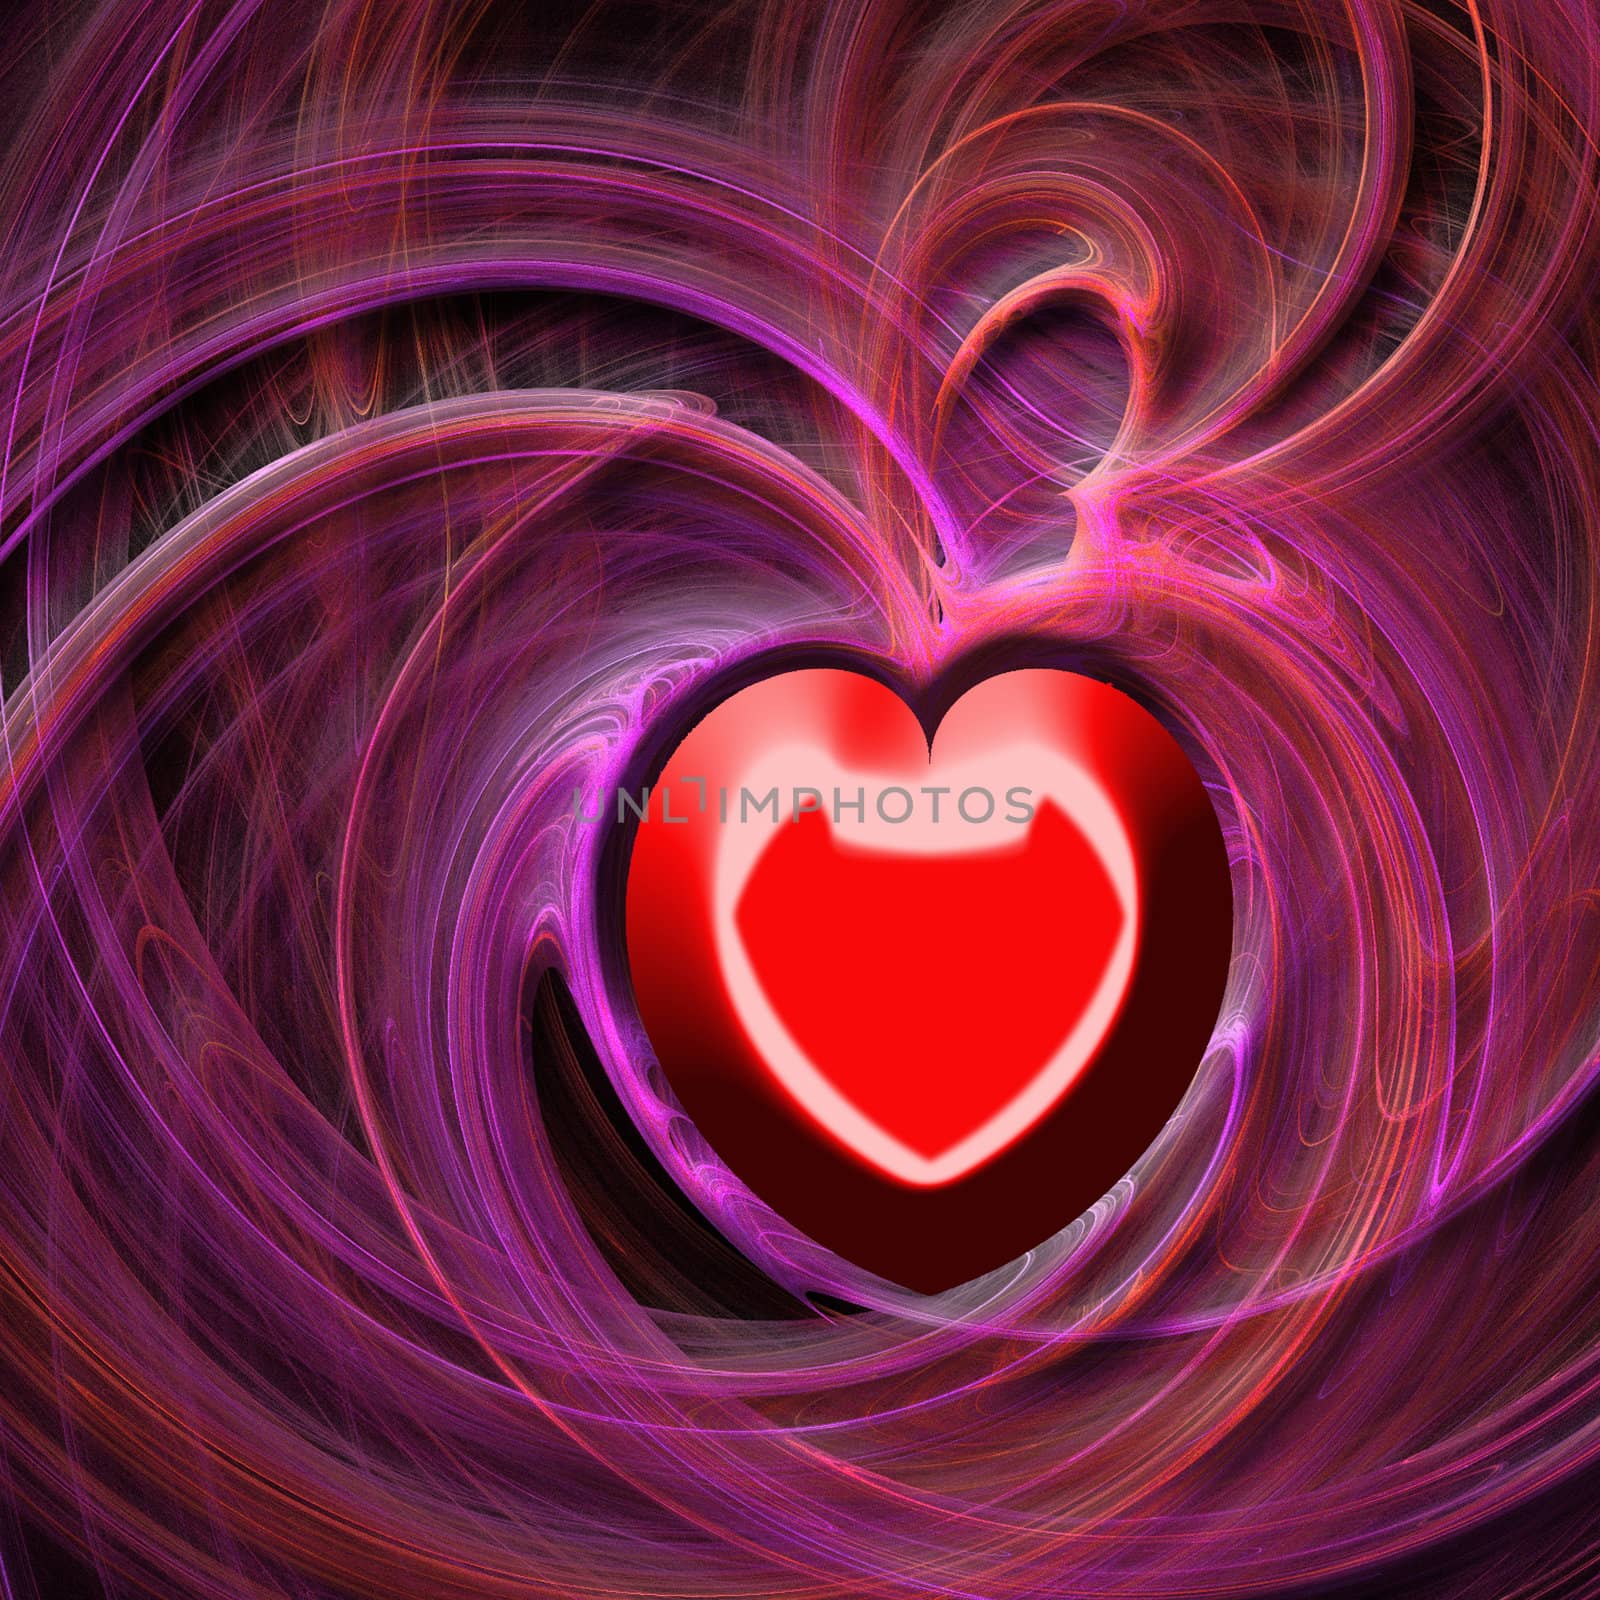 fraktal heart by aziatik13